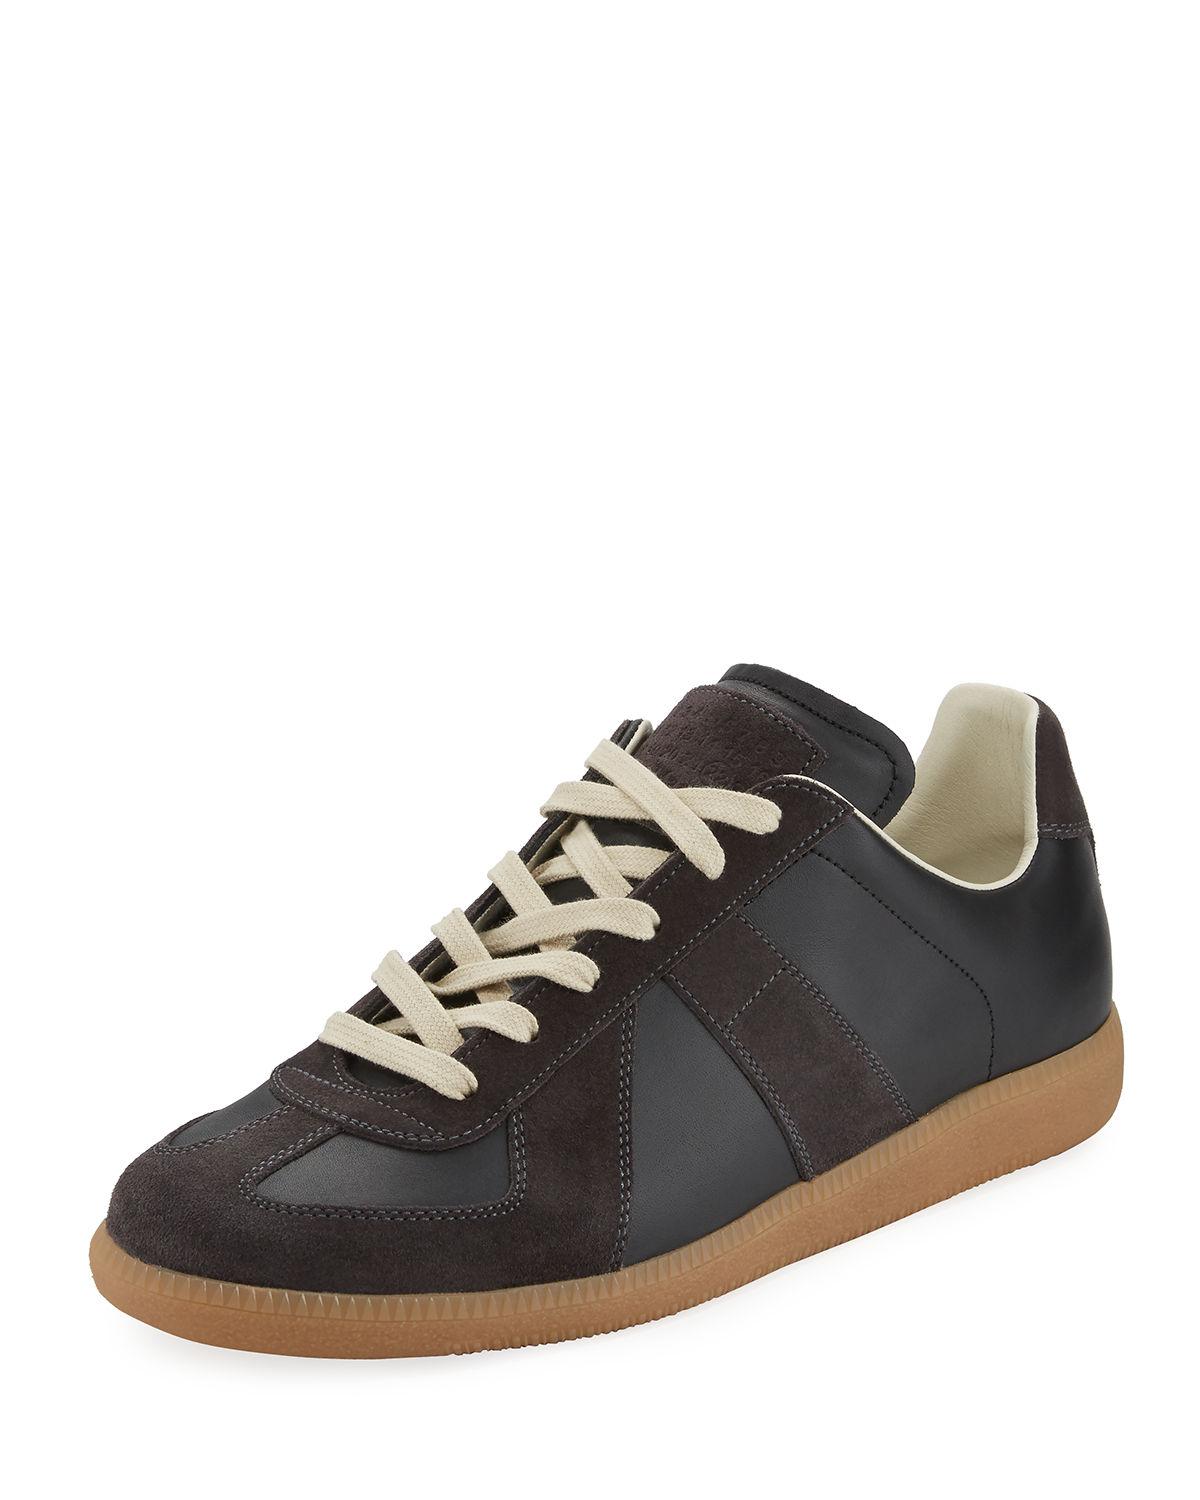 Maison Margiela Men's Replica Leather & Suede Low-top Sneakers in Black ...